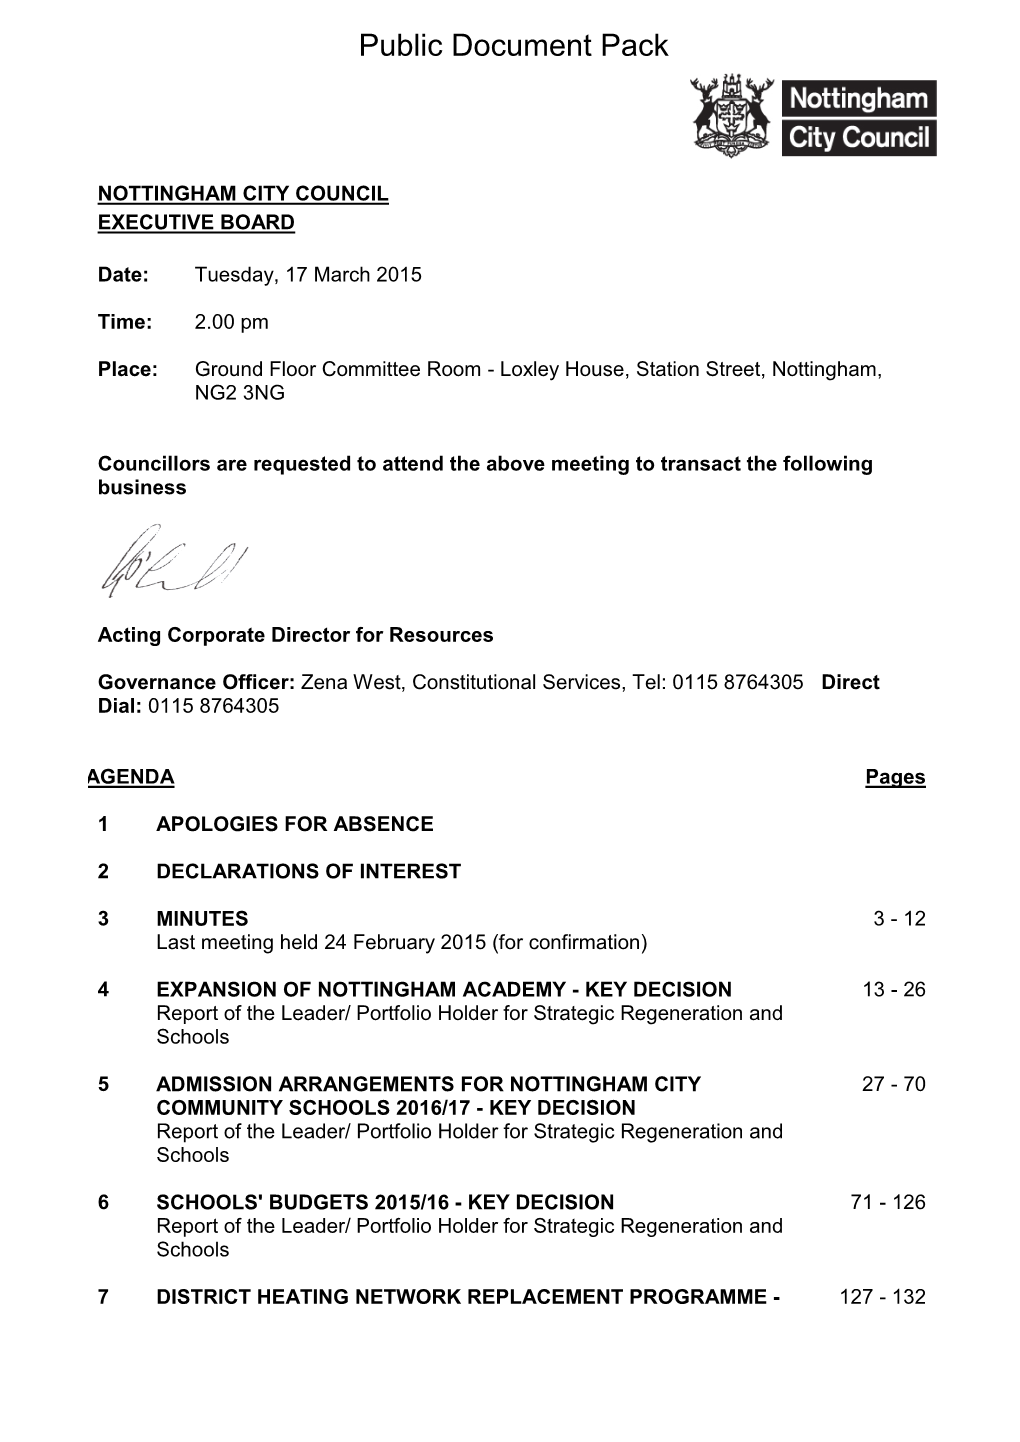 (Public Pack)Agenda Document for Executive Board, 17/03/2015 14:00